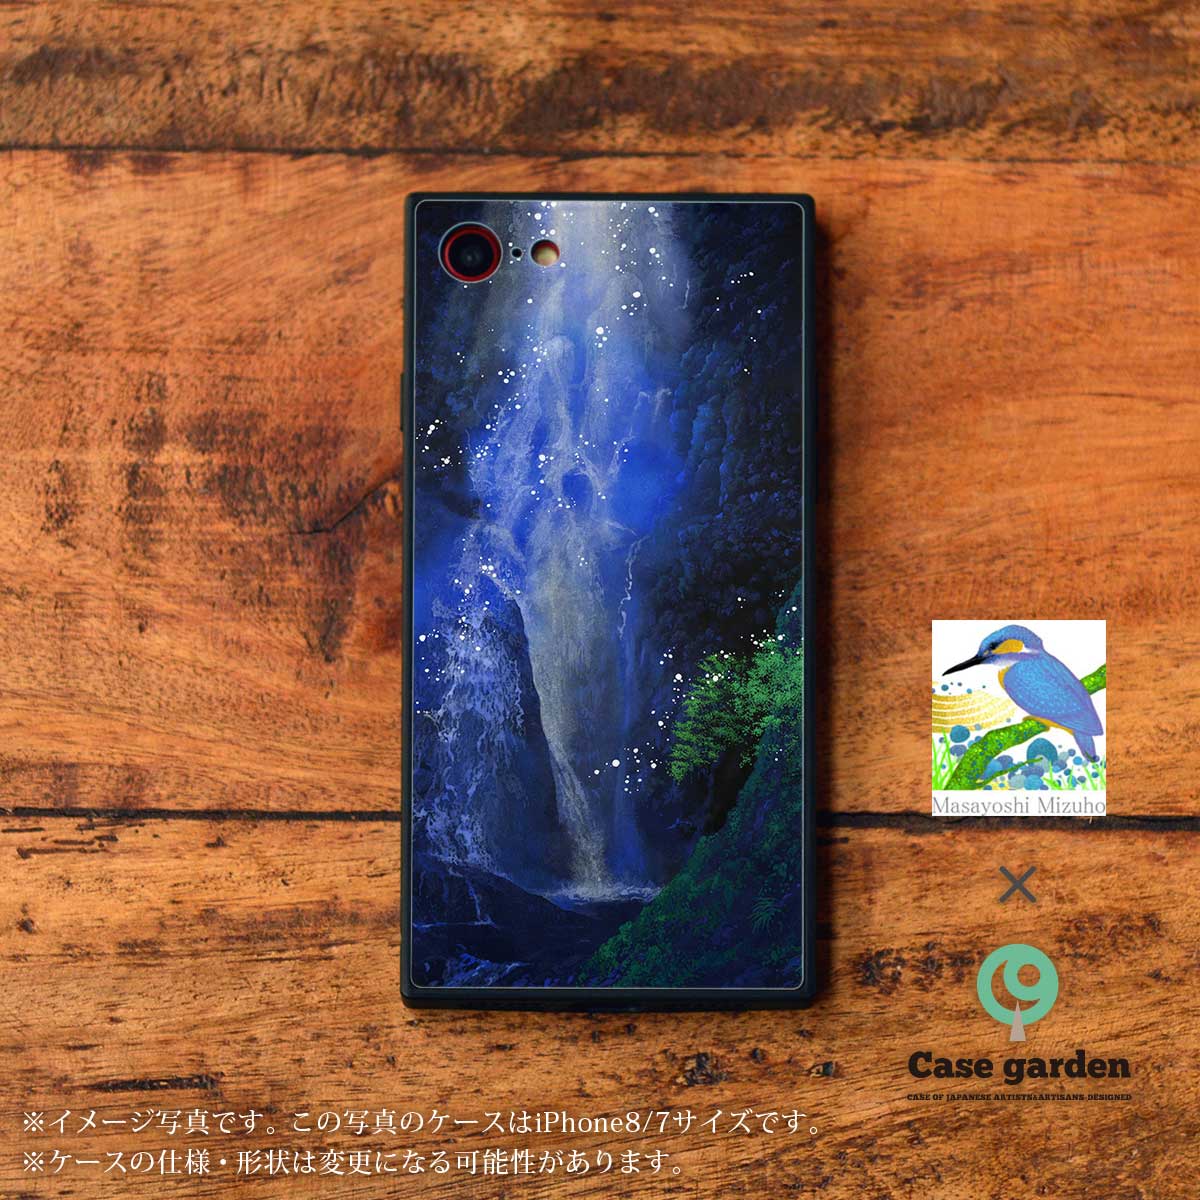 Masayoshi Mizuhoデザインの、キラキラと輝く背面カバーのガラスが美しいスクエア型強化ガラススマホケース「静かな滝」です。写真の機種はiPhoneXRです。